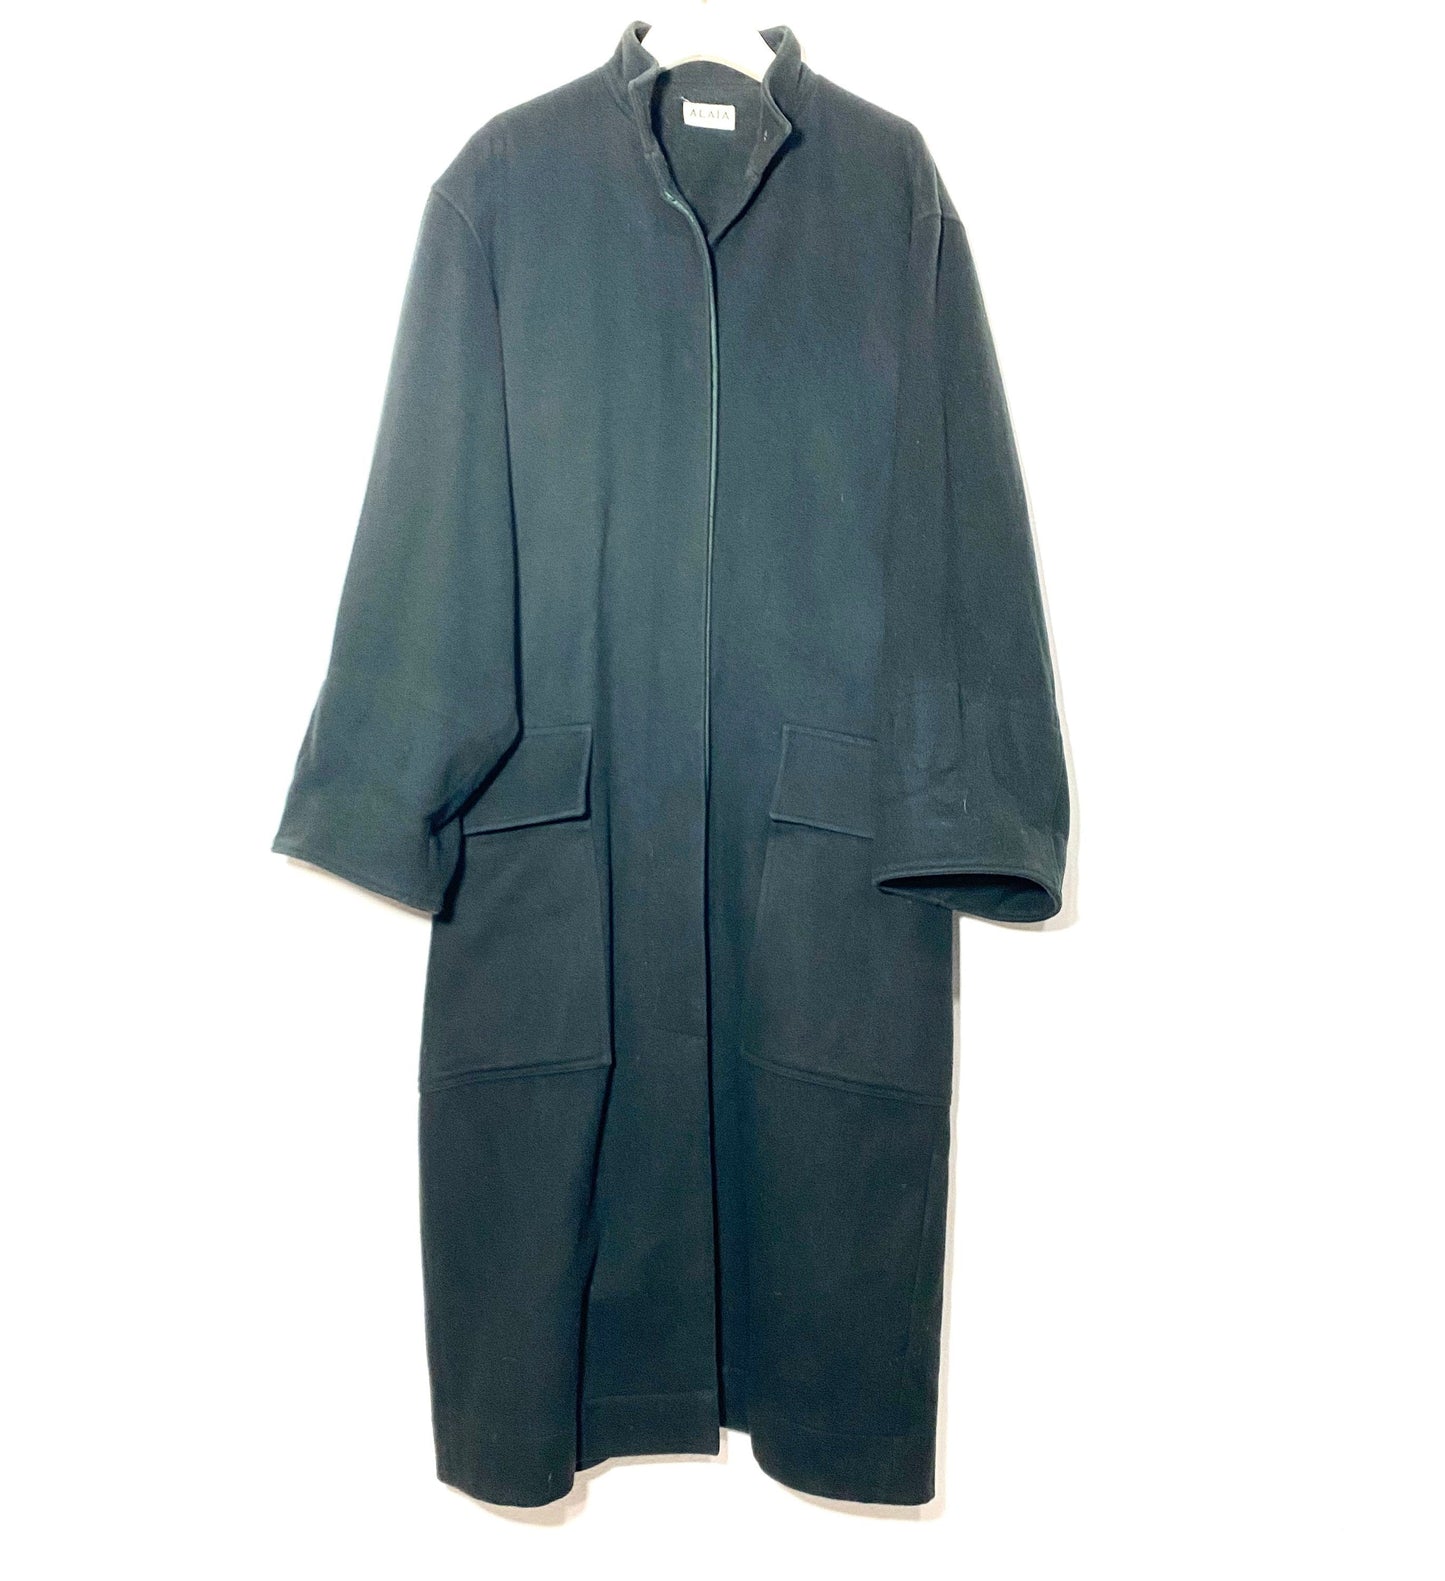 Alaia Paris vintage 80s petrol green wool coat, mint condition